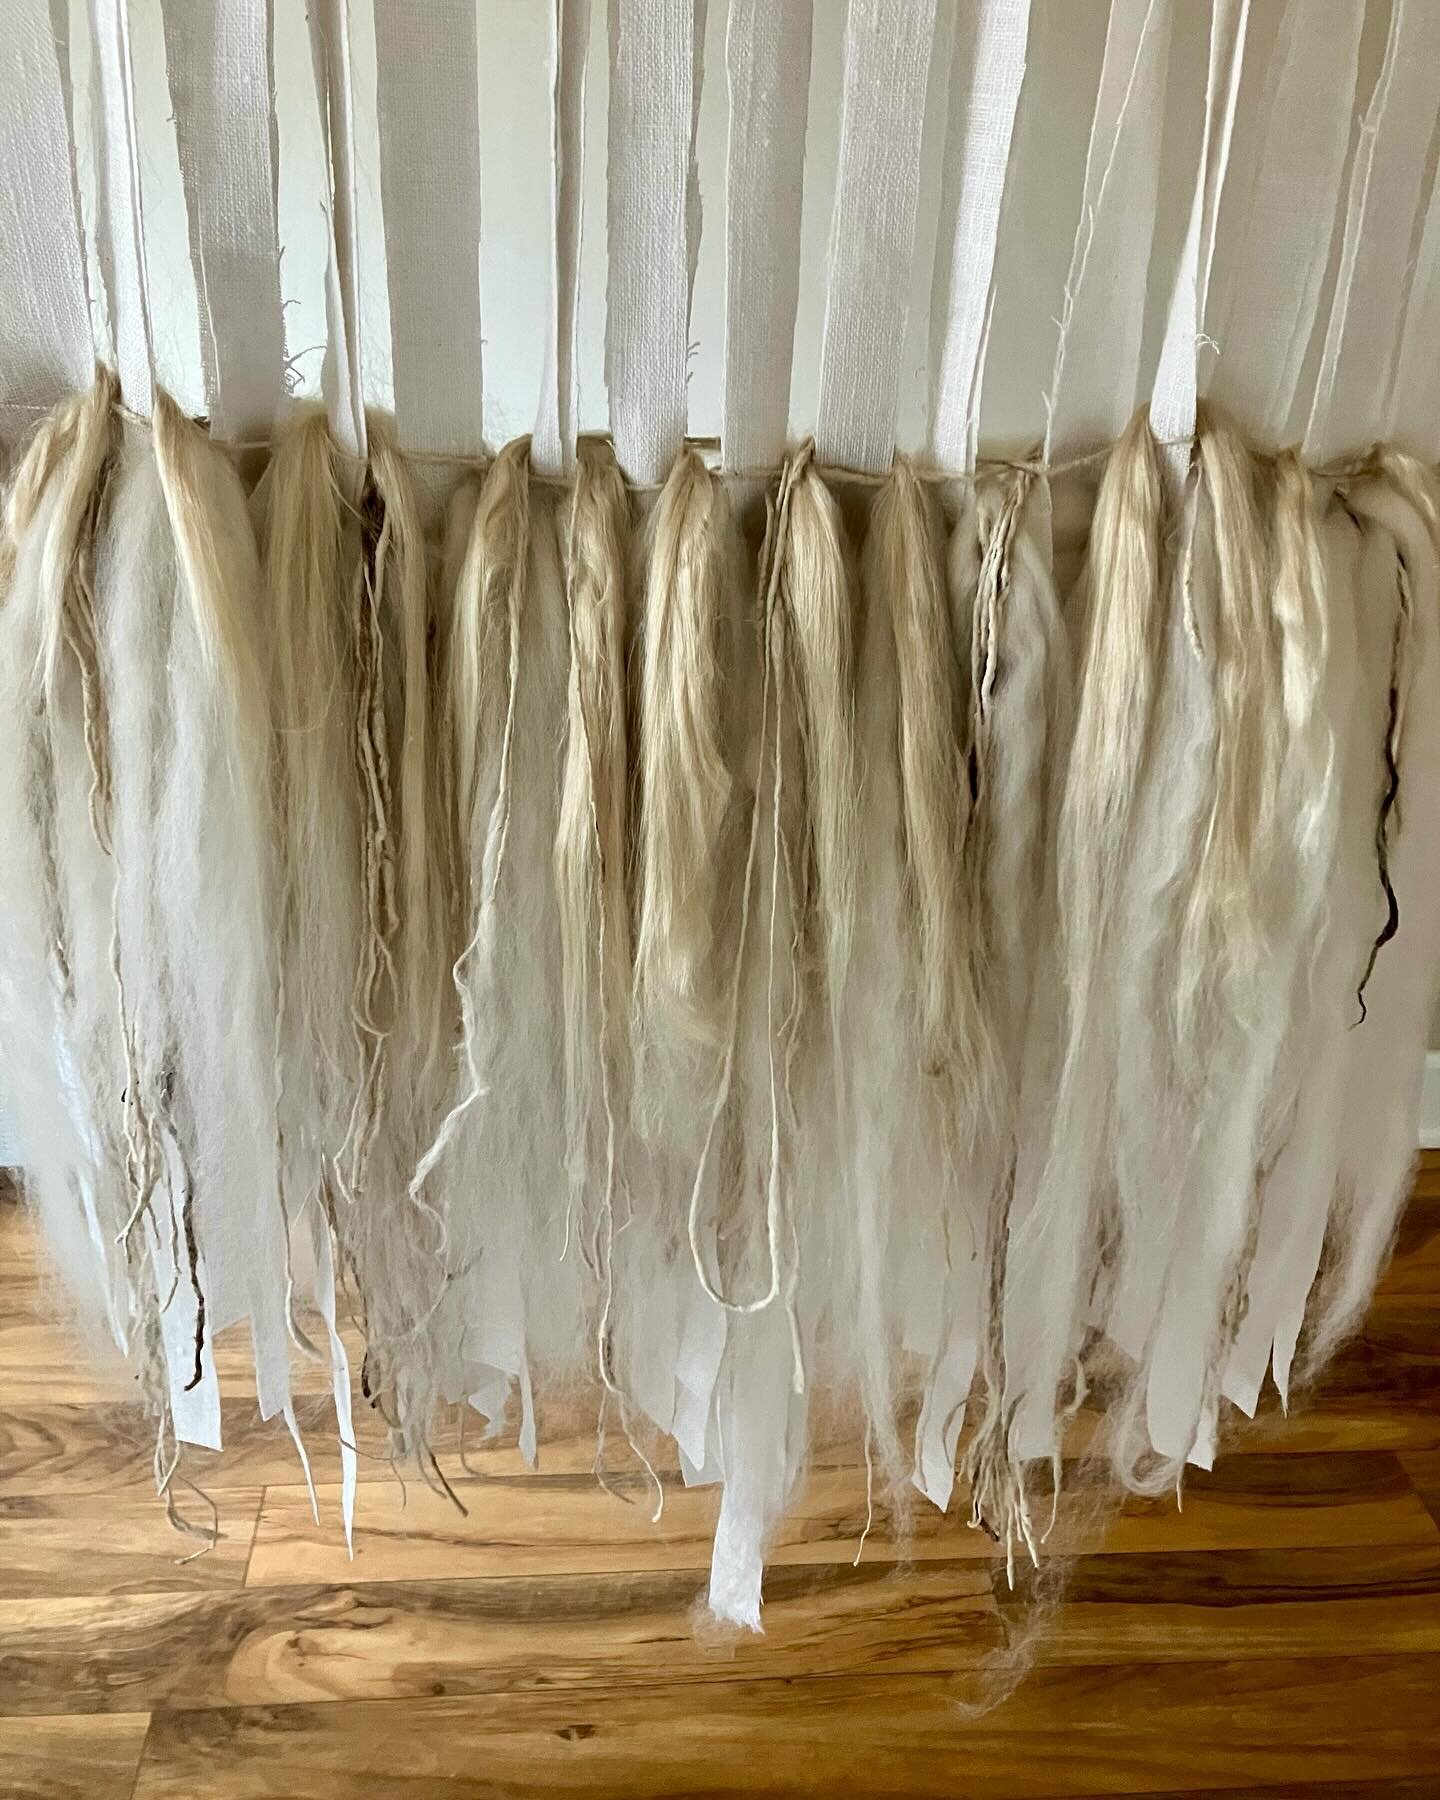 #wip Weaving a new piece off loom on linen strips with ahimsa silk, and organic merino wool. #kindofamazing #woolart #ahimsasilk